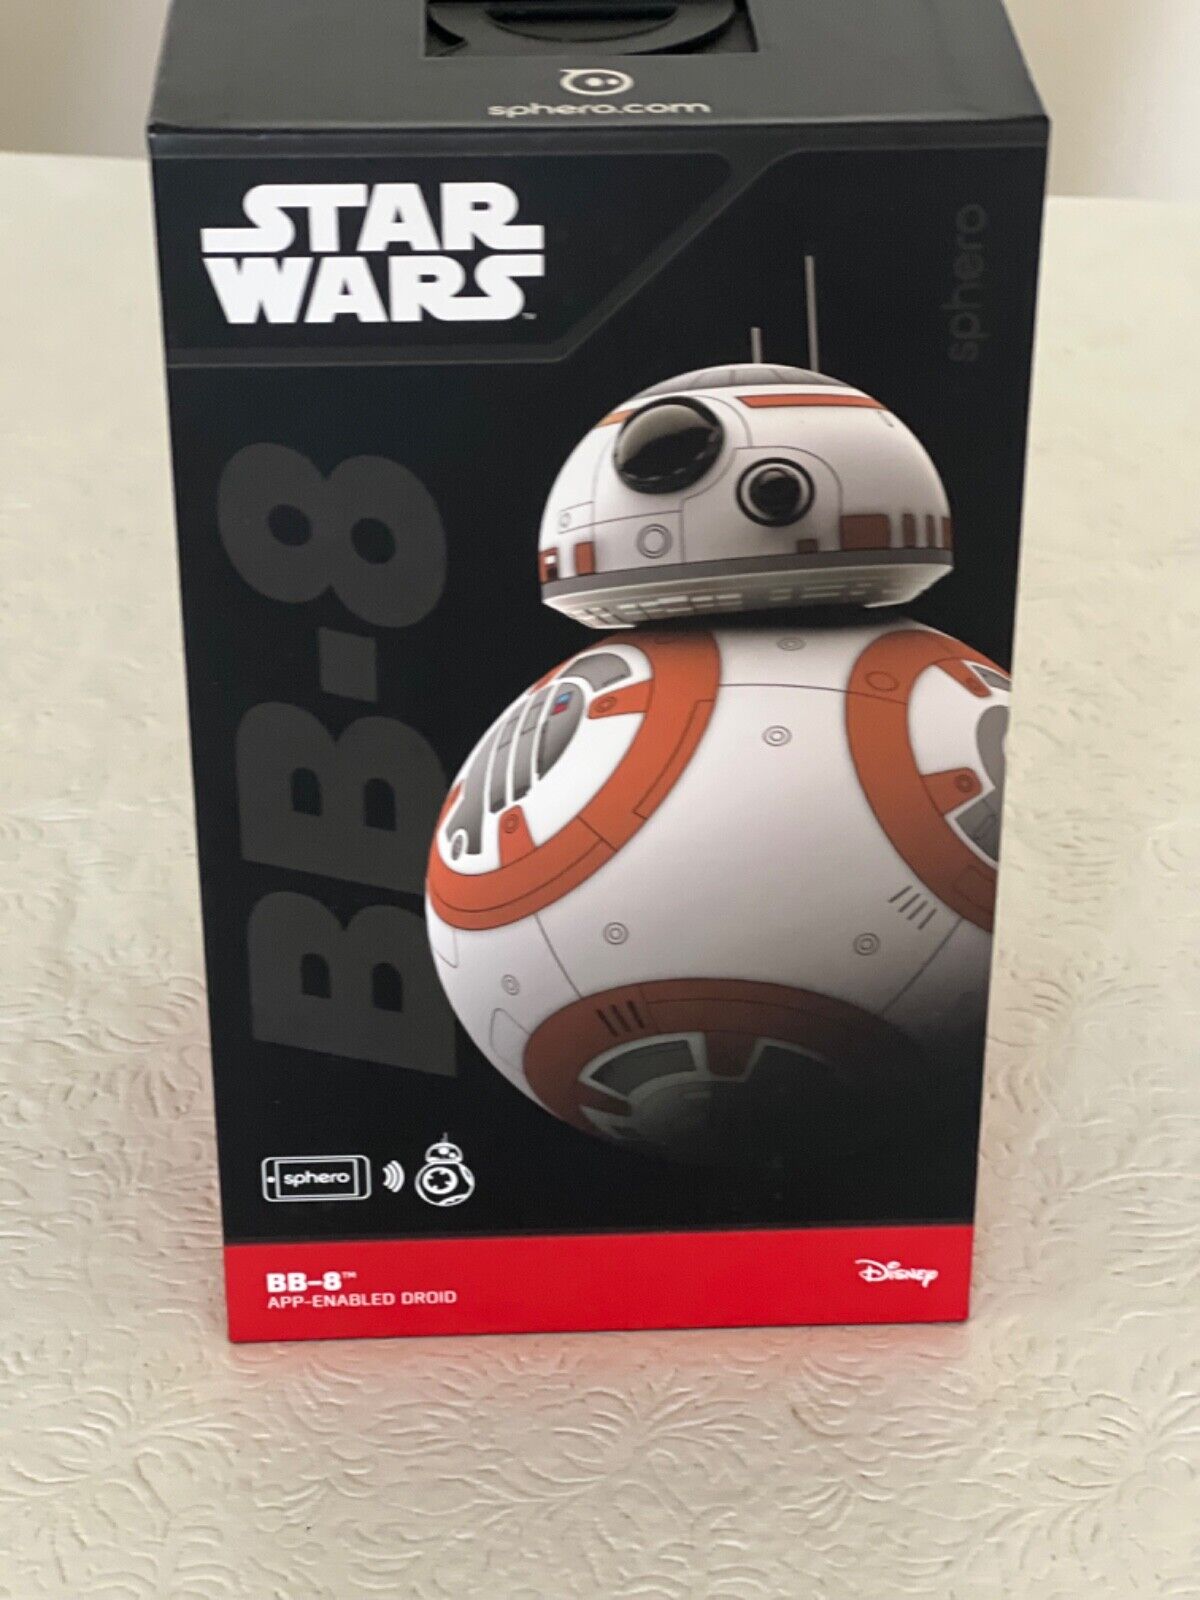 Disney Sphero Star Wars BB-8 App Enabled Droid - Complete w/ Box